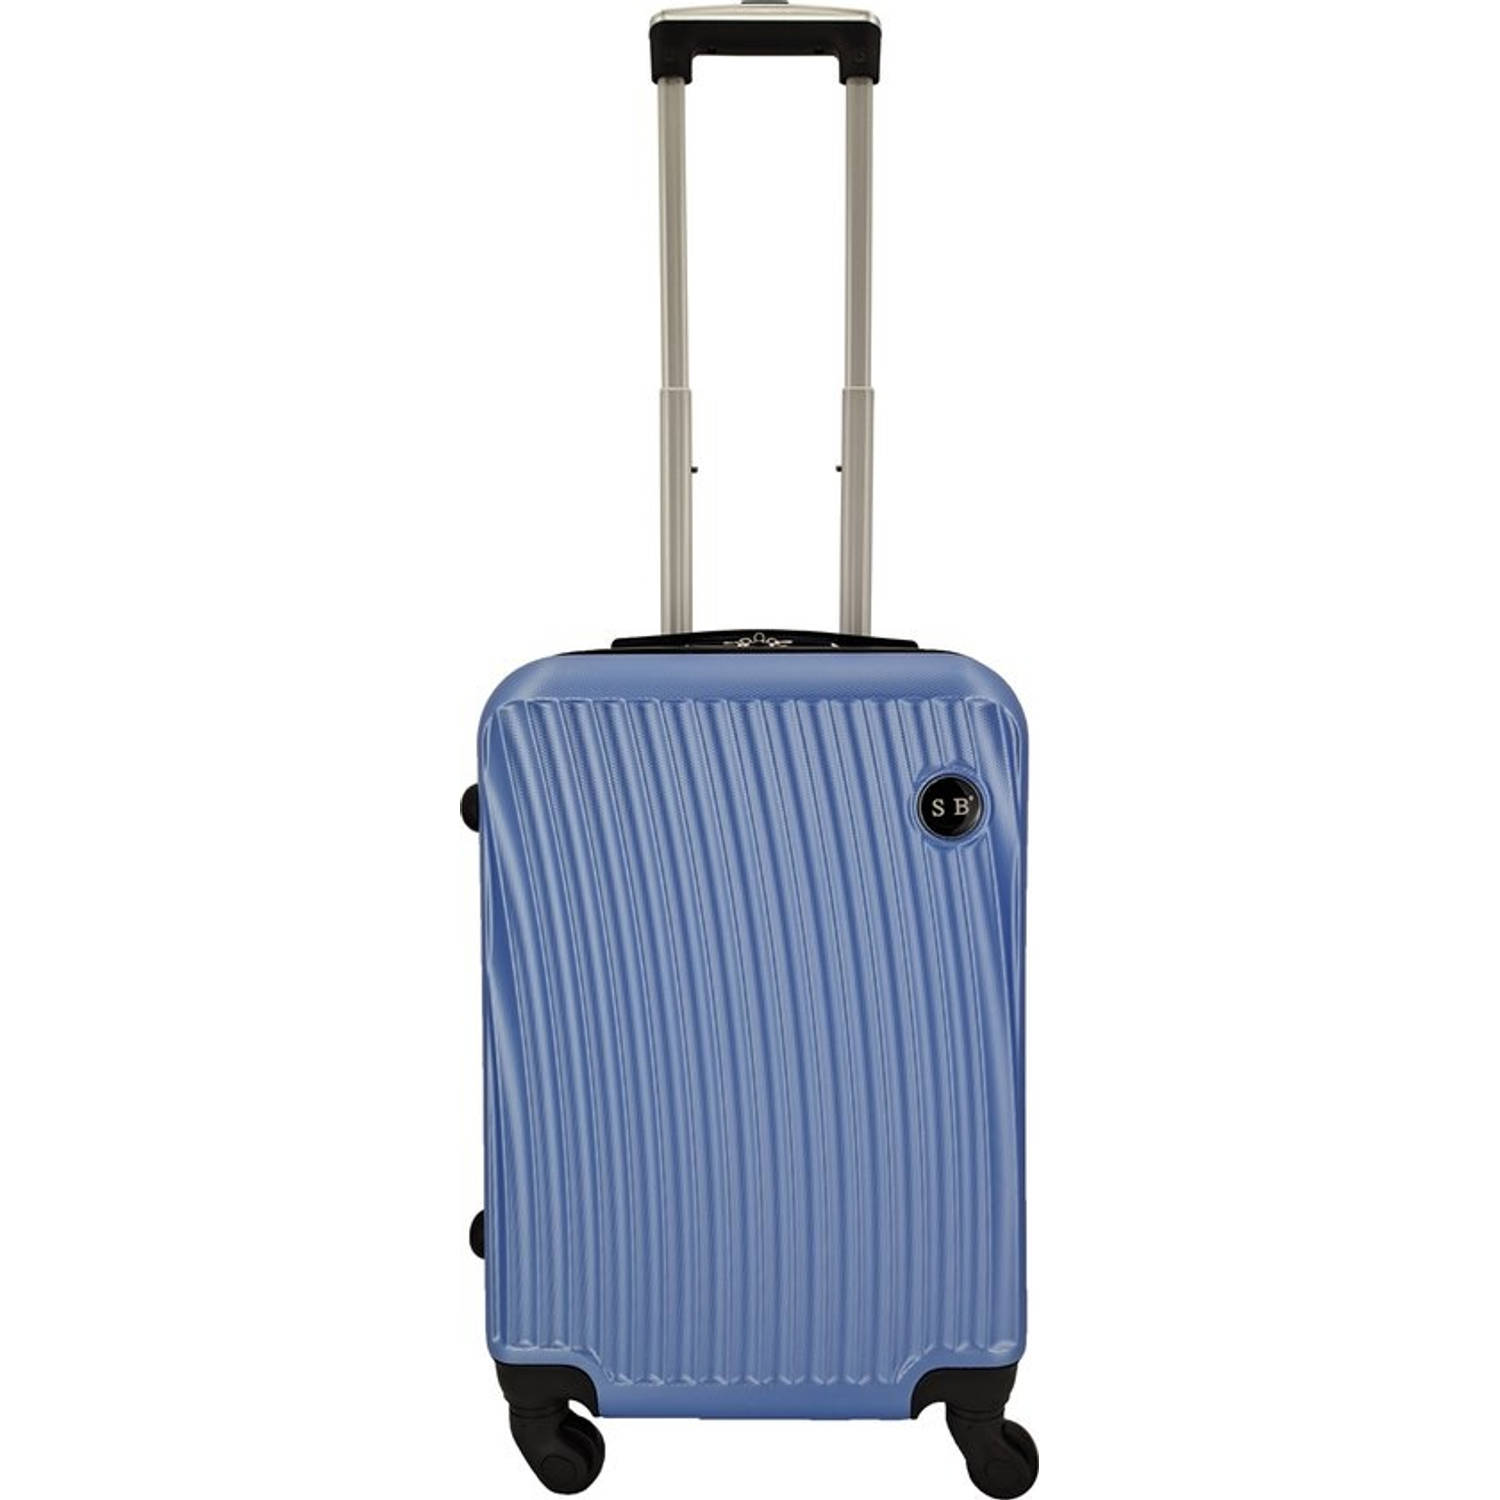 Sb Travelbags Small Koffer Voor Handbagage - Lichtblauw